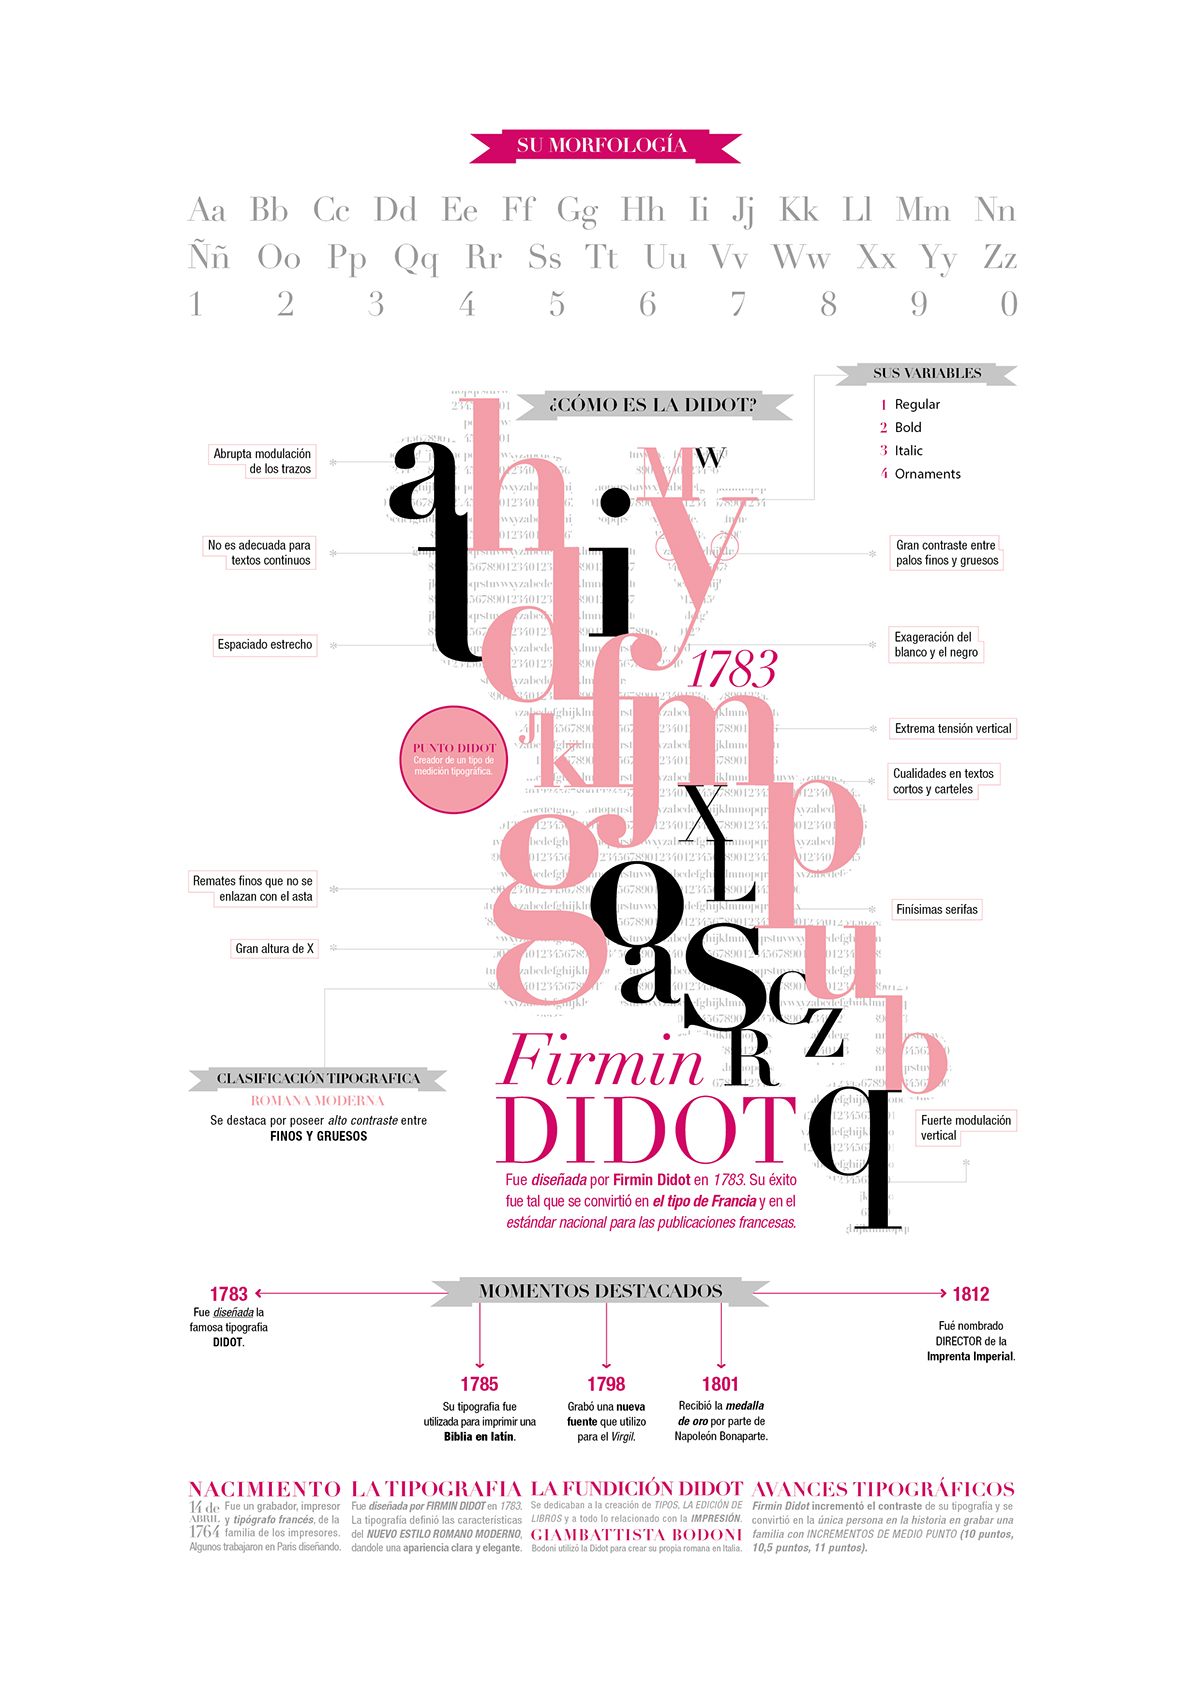 #graphic #Design #graphicDesign #typography #infography #infographic #Didot #firmin #firmindidot #Fundación #Gutenberg #fundaciongutenberg